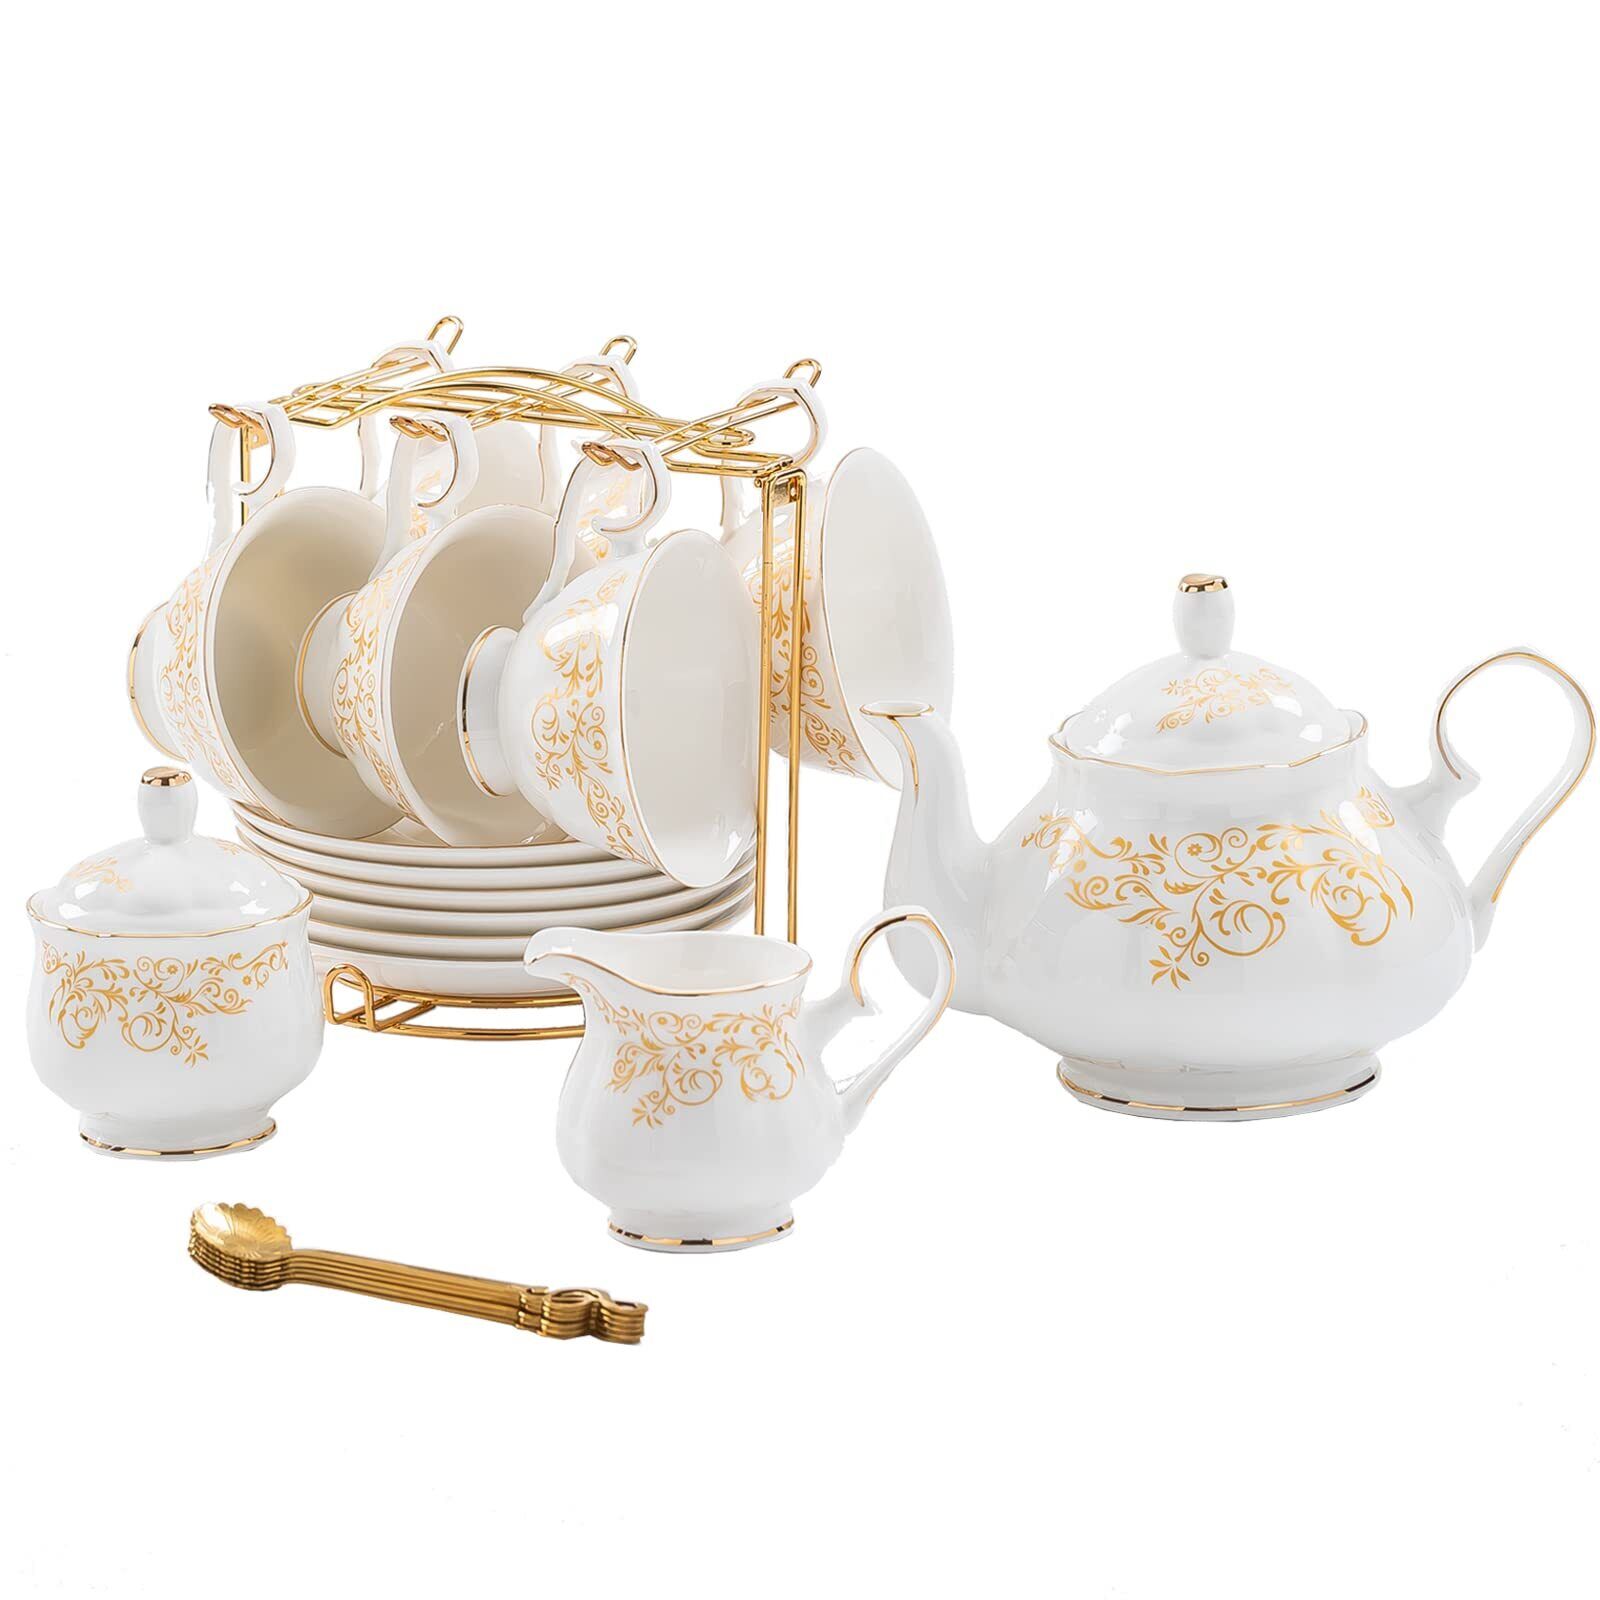 22-Pieces Porcelain Tea Set, Cups& Saucer Service for 6, with Spoons,Teapot,S...